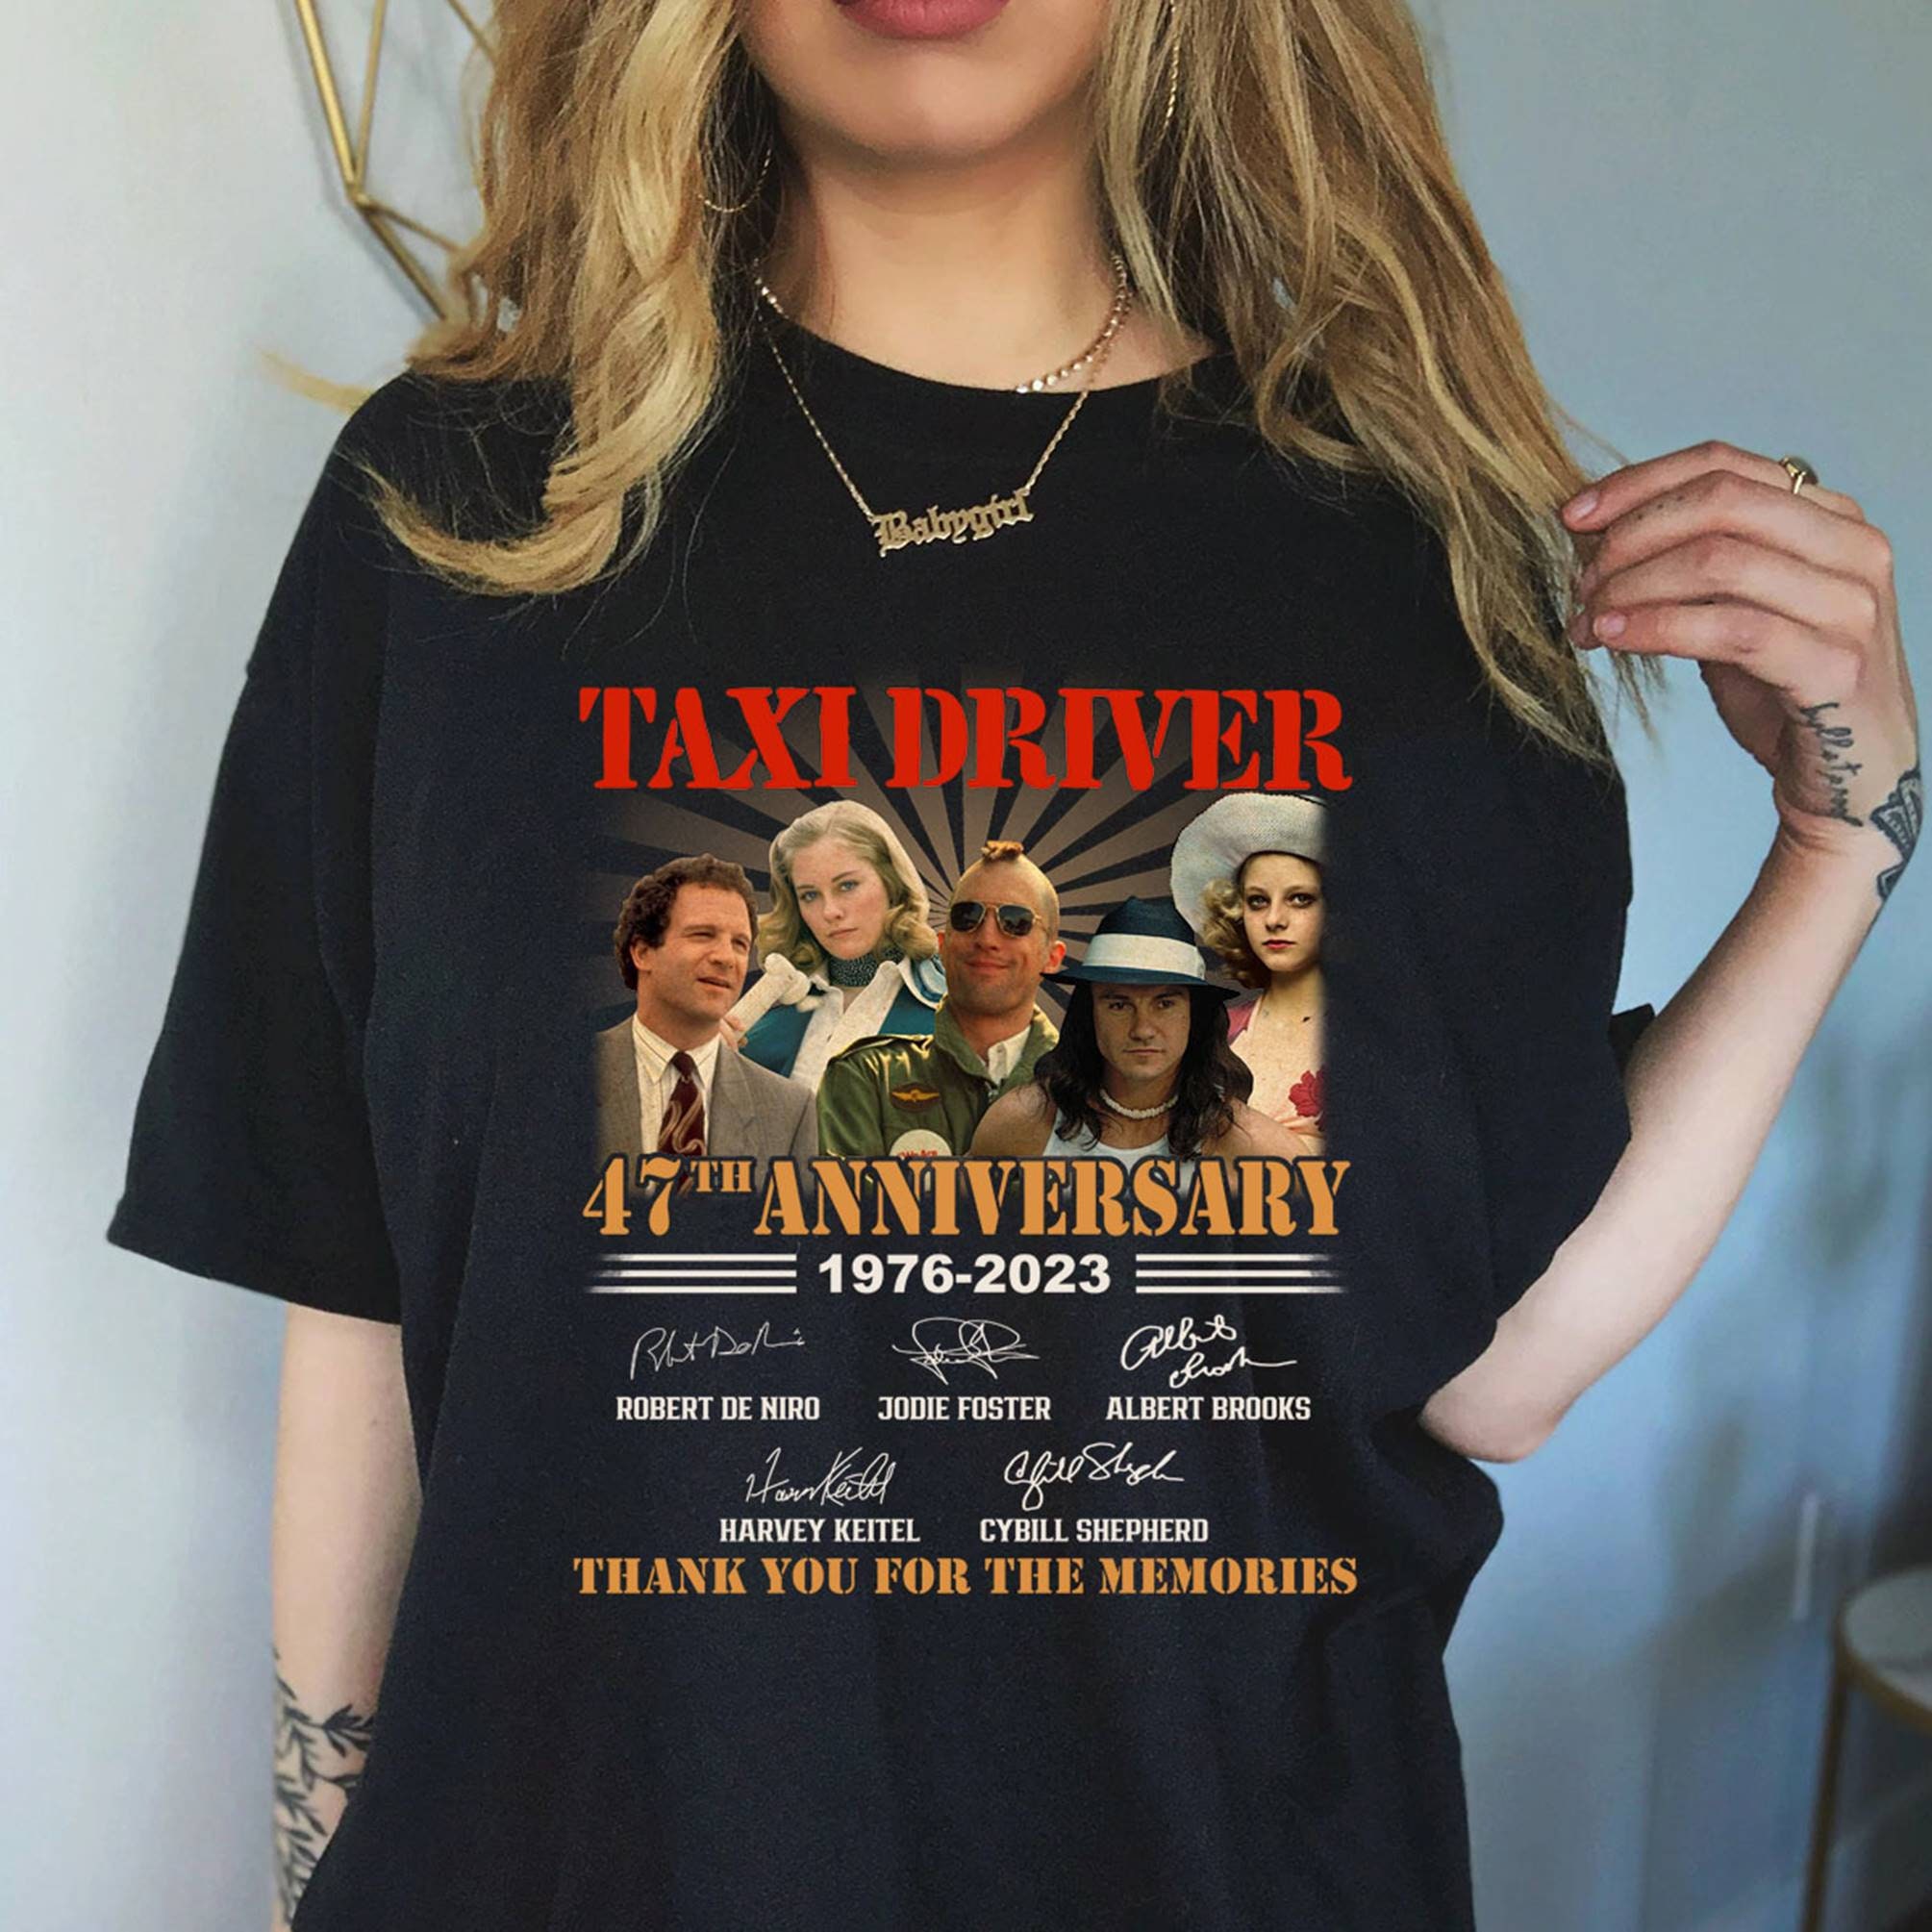 Discover Taxi Driver Shirt Taxi Driver 47th Anniversary Tshirt